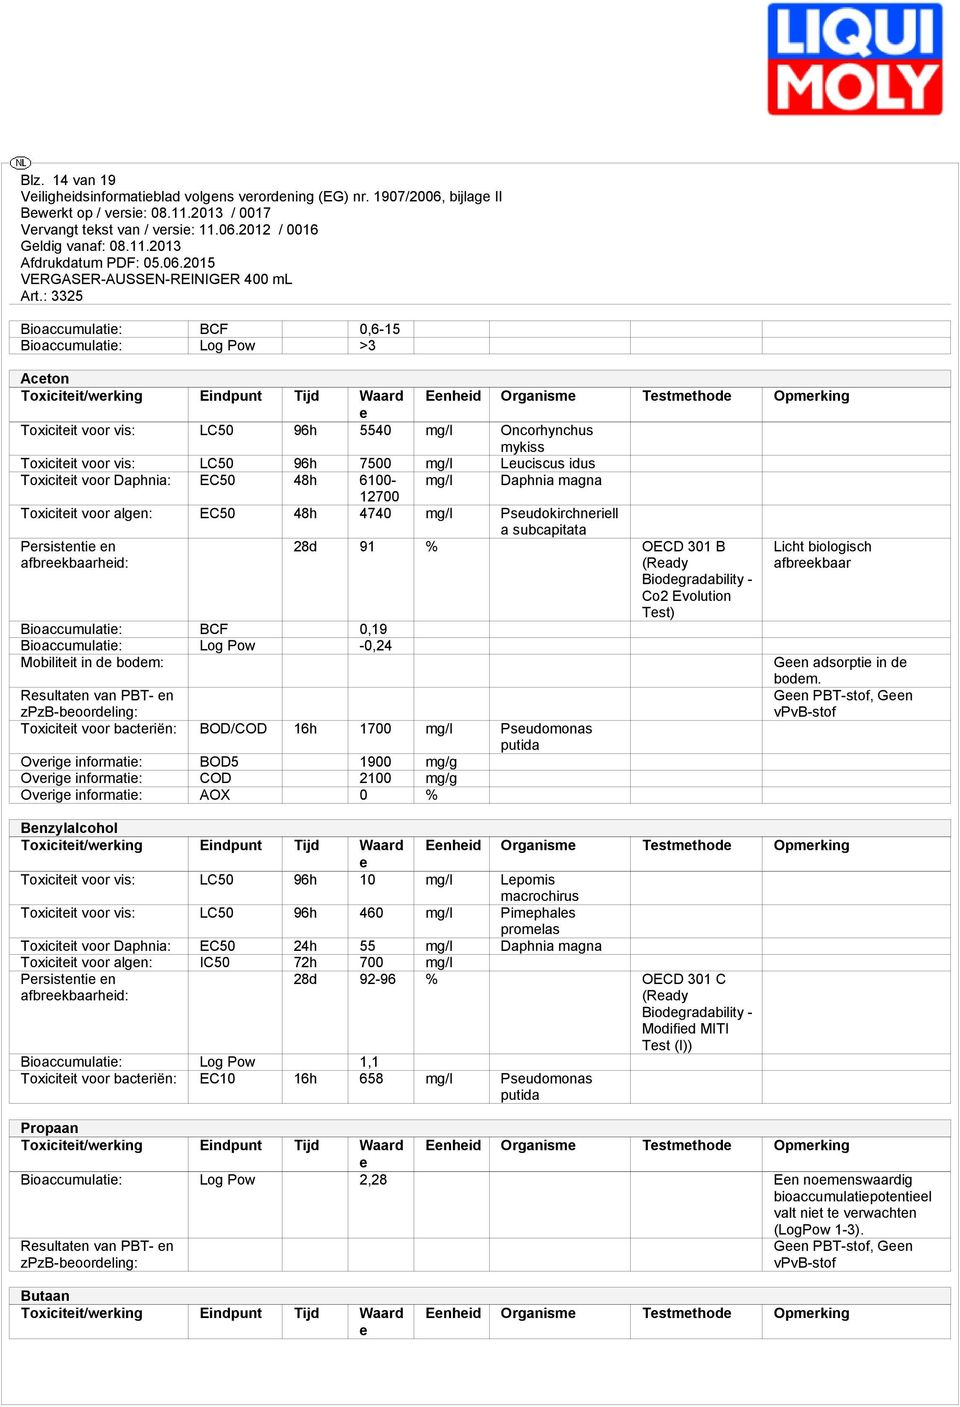 BCF 0,19 Bioaccumulai: Log Pow -0,24 Mobilii in d bodm: a subcapiaa 28d 91 % OECD 301 B (Rady Biodgradabiliy - Co2 Evoluion Ts) Rsulan van PBT- n zpzb-boordling: Toxicii voor bacriën: BOD/COD 16h